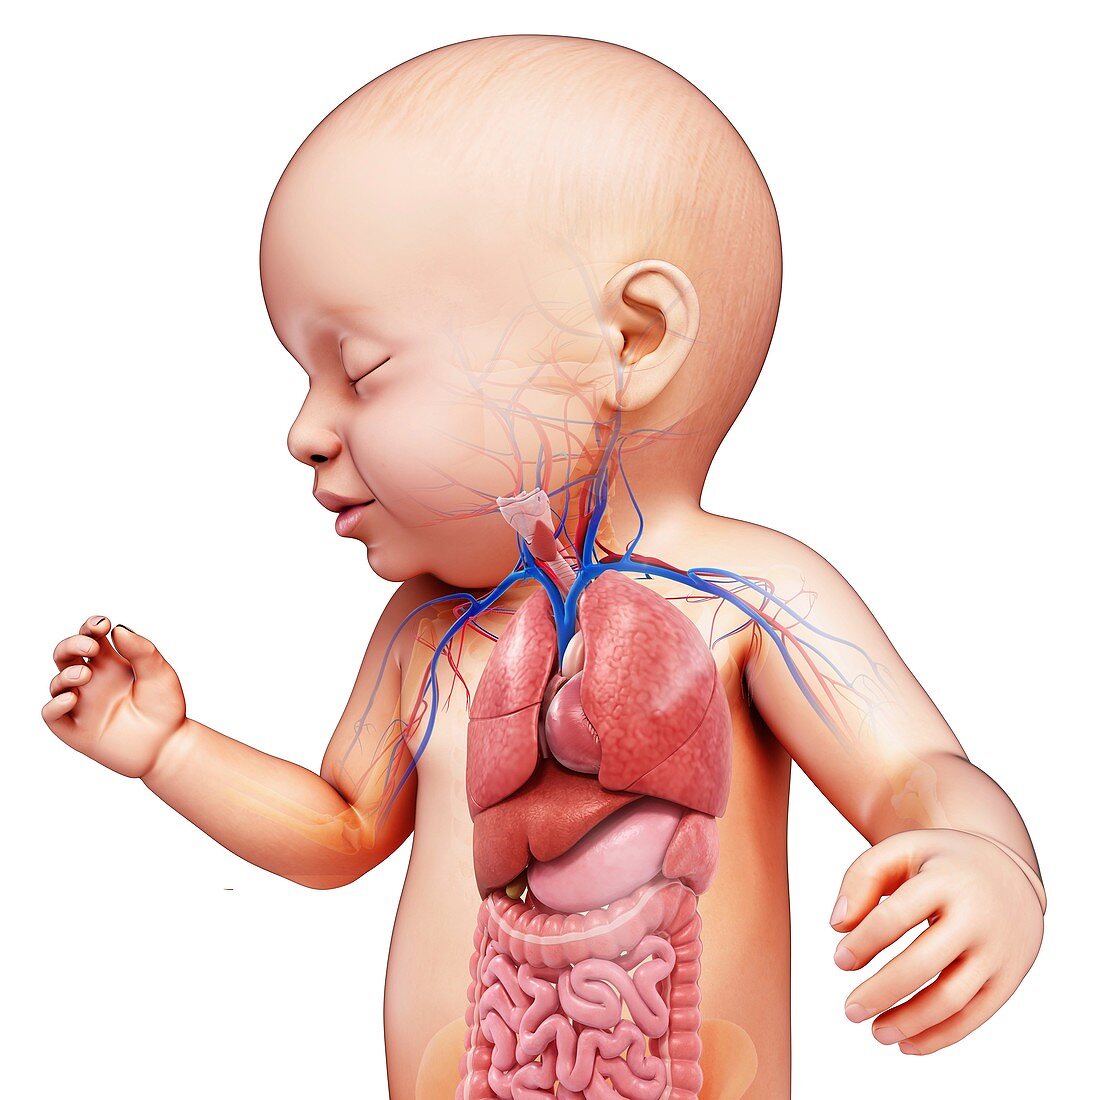 Baby's body organs, illustration